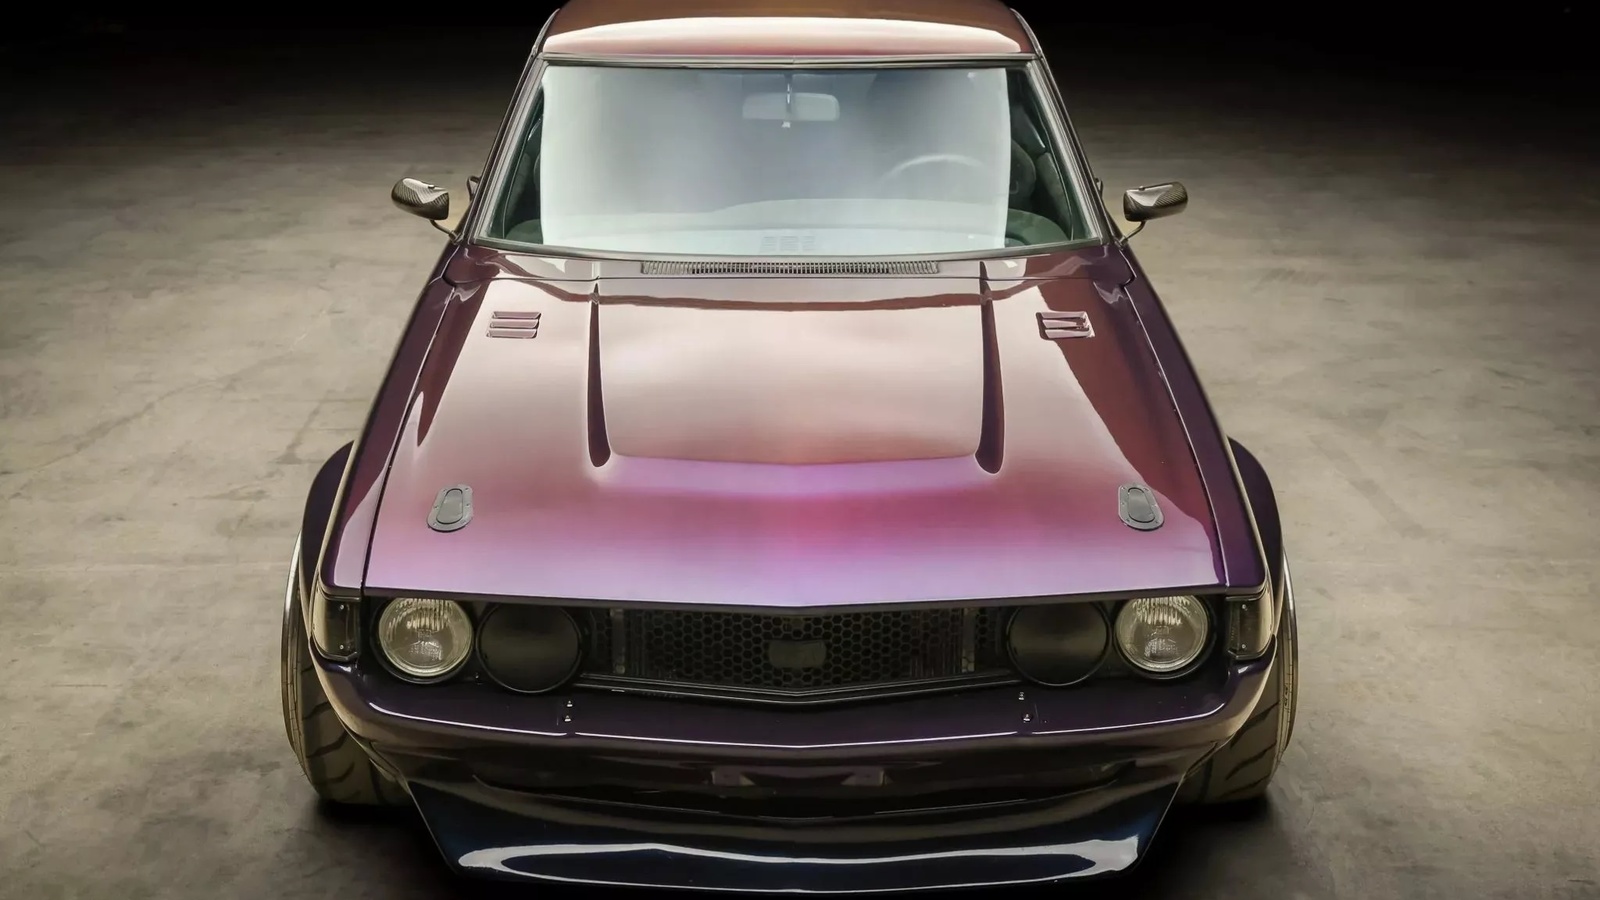 toyota, toyota celica, vehicle, 1977, classic car, purple cars